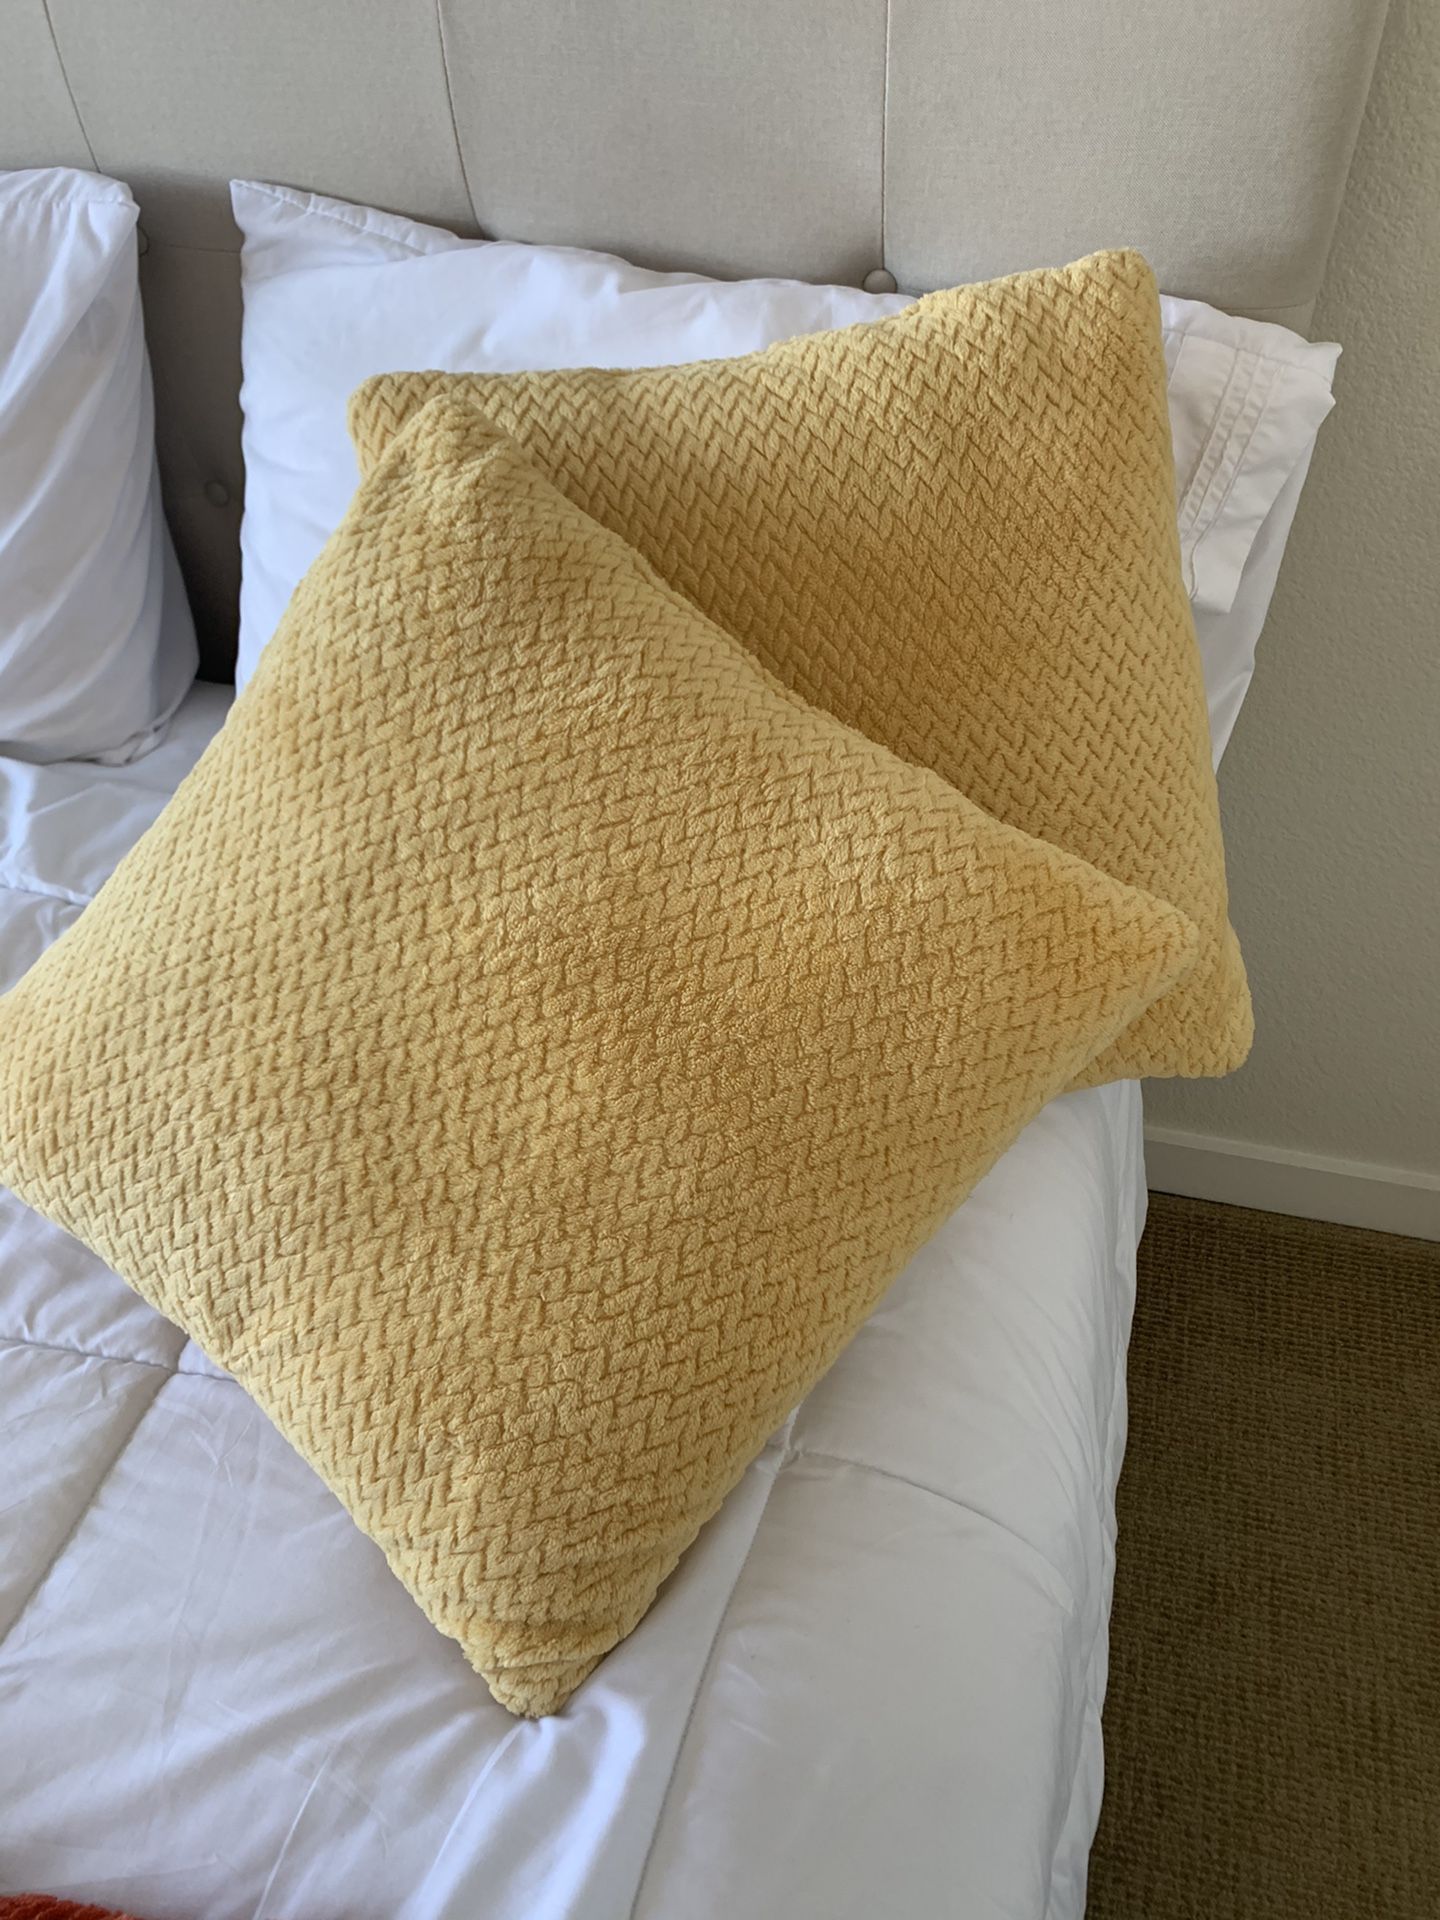 Decorative pillows + throw blanket